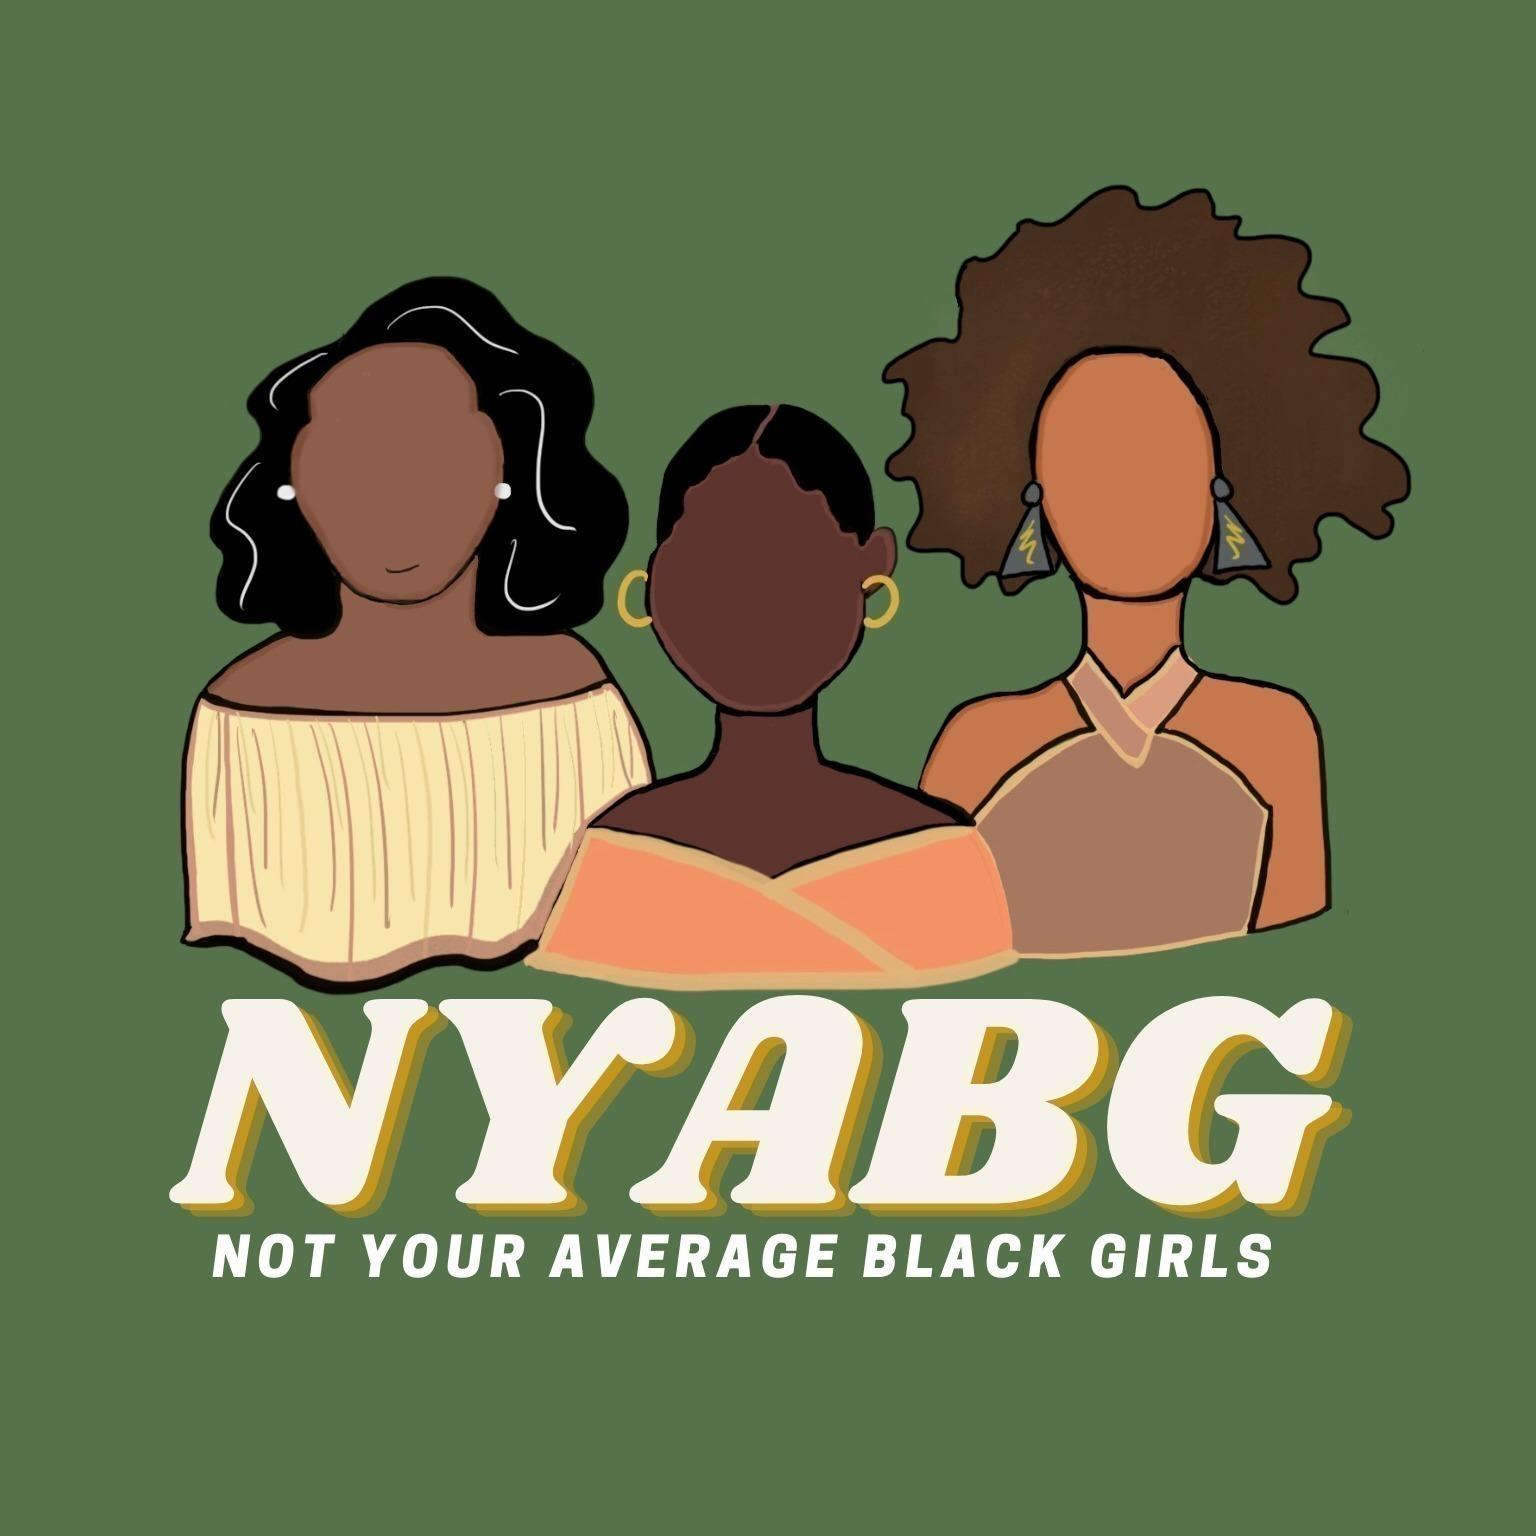 Not Your Average Black Girls